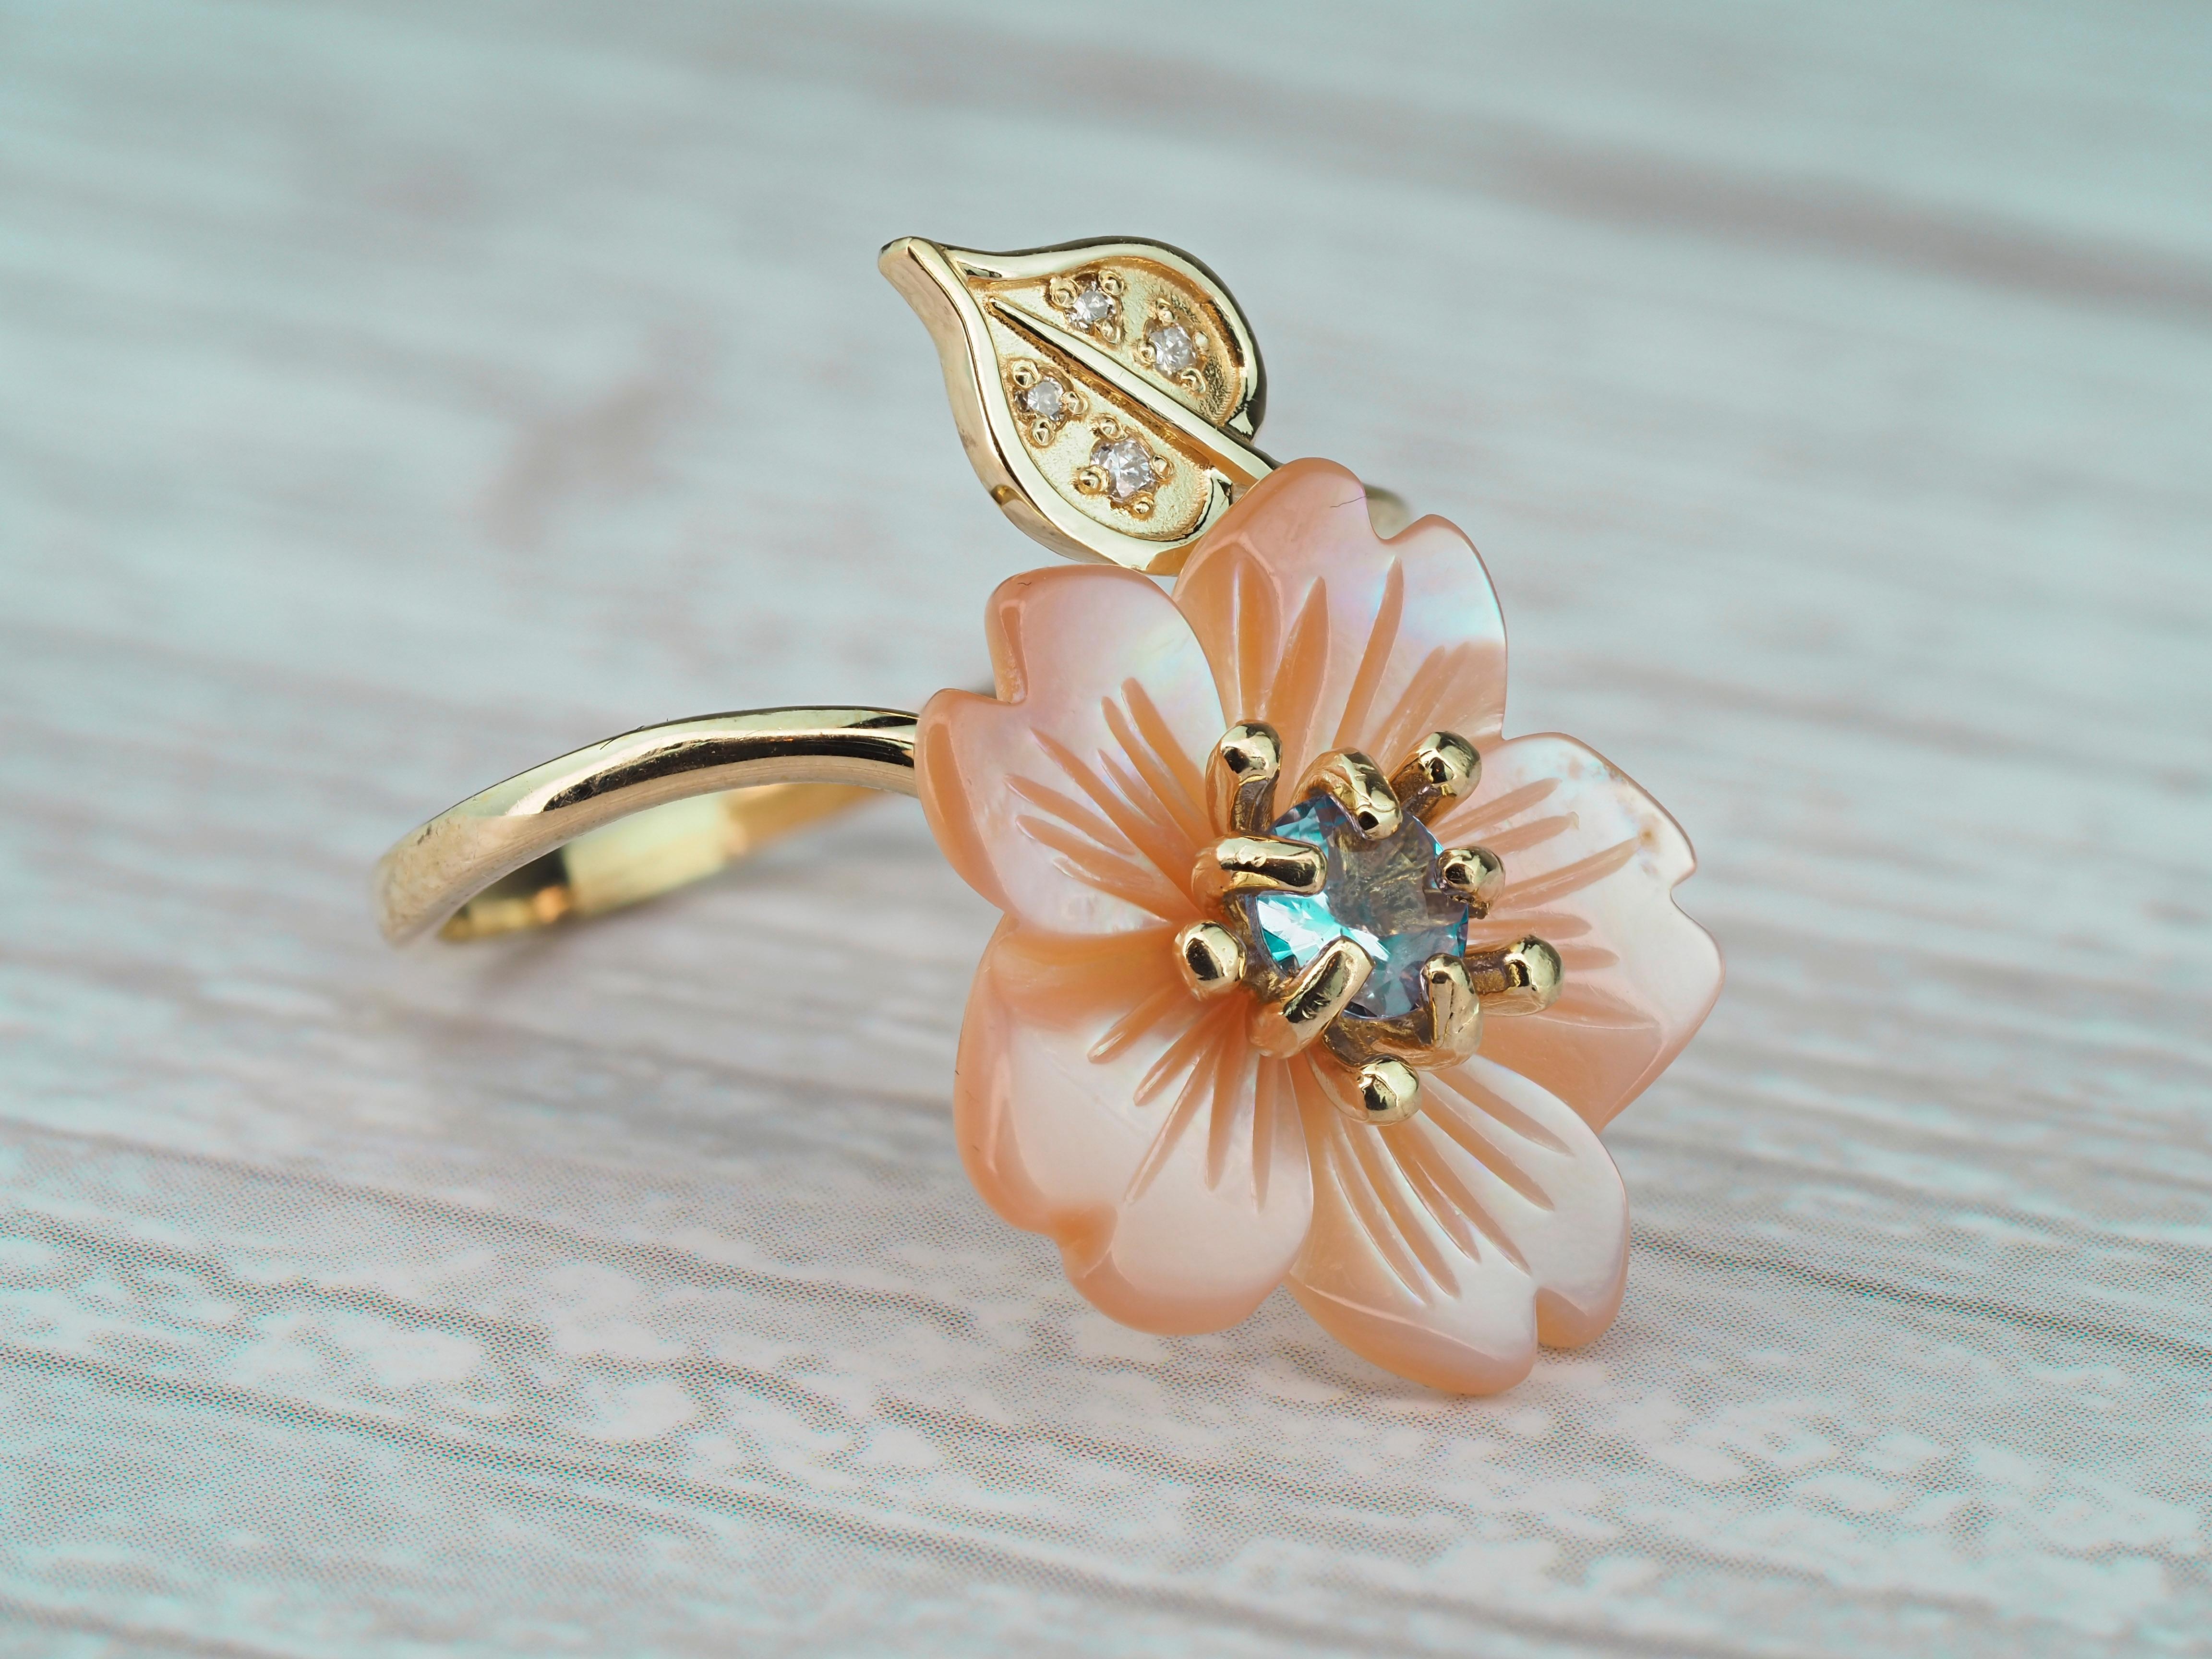 For Sale:  Carved Flower 14k ring with gemstones.  5